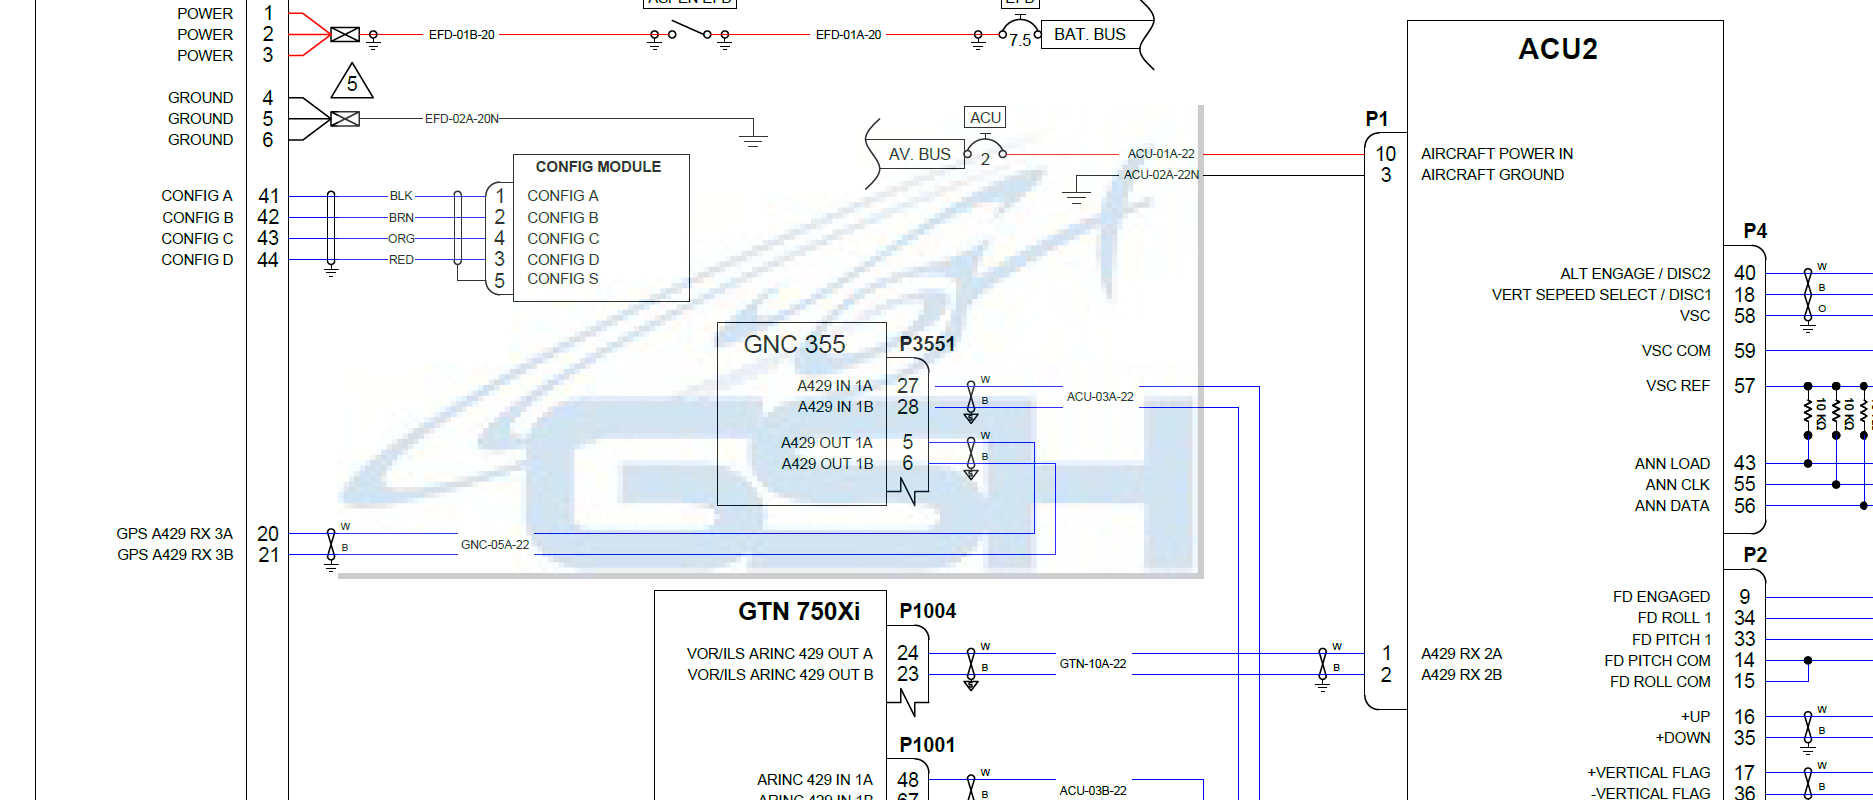 An AutoCAD wiring diagram